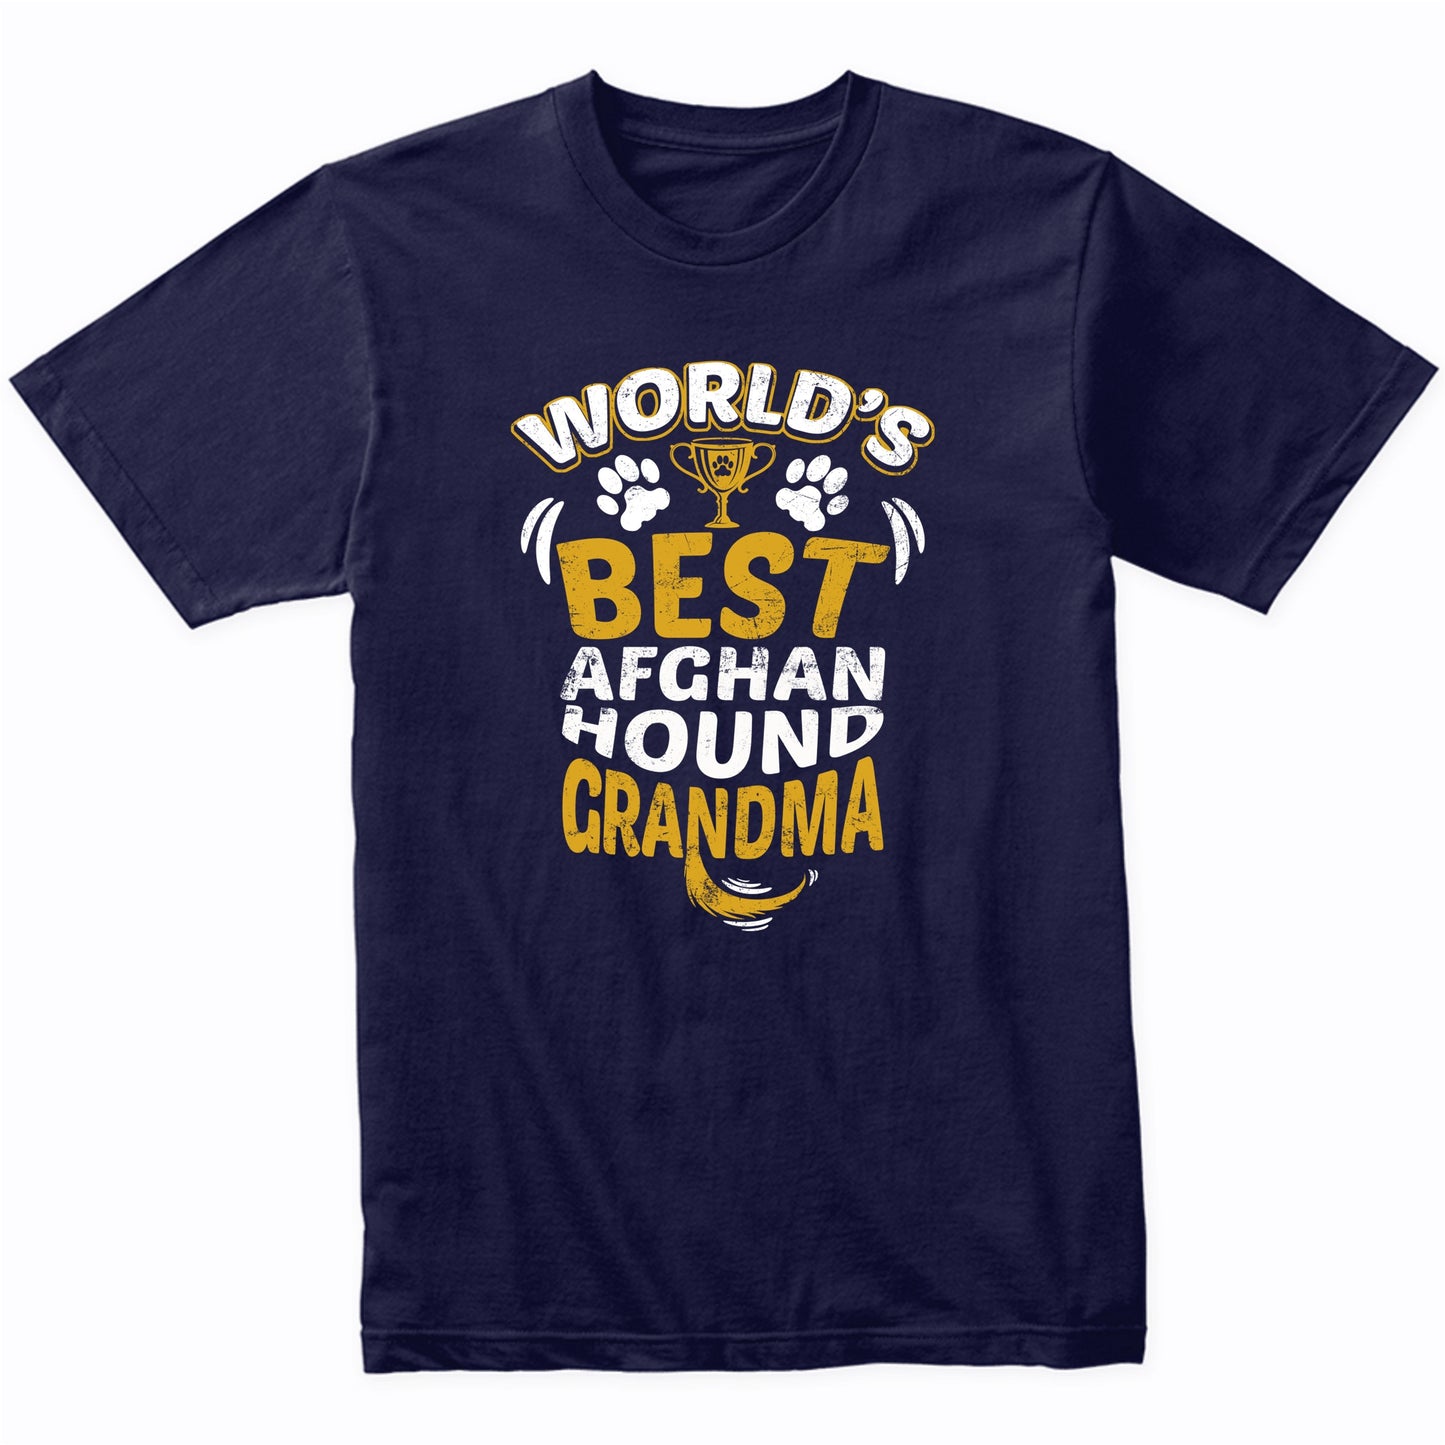 World's Best Afghan Hound Grandma Graphic T-Shirt